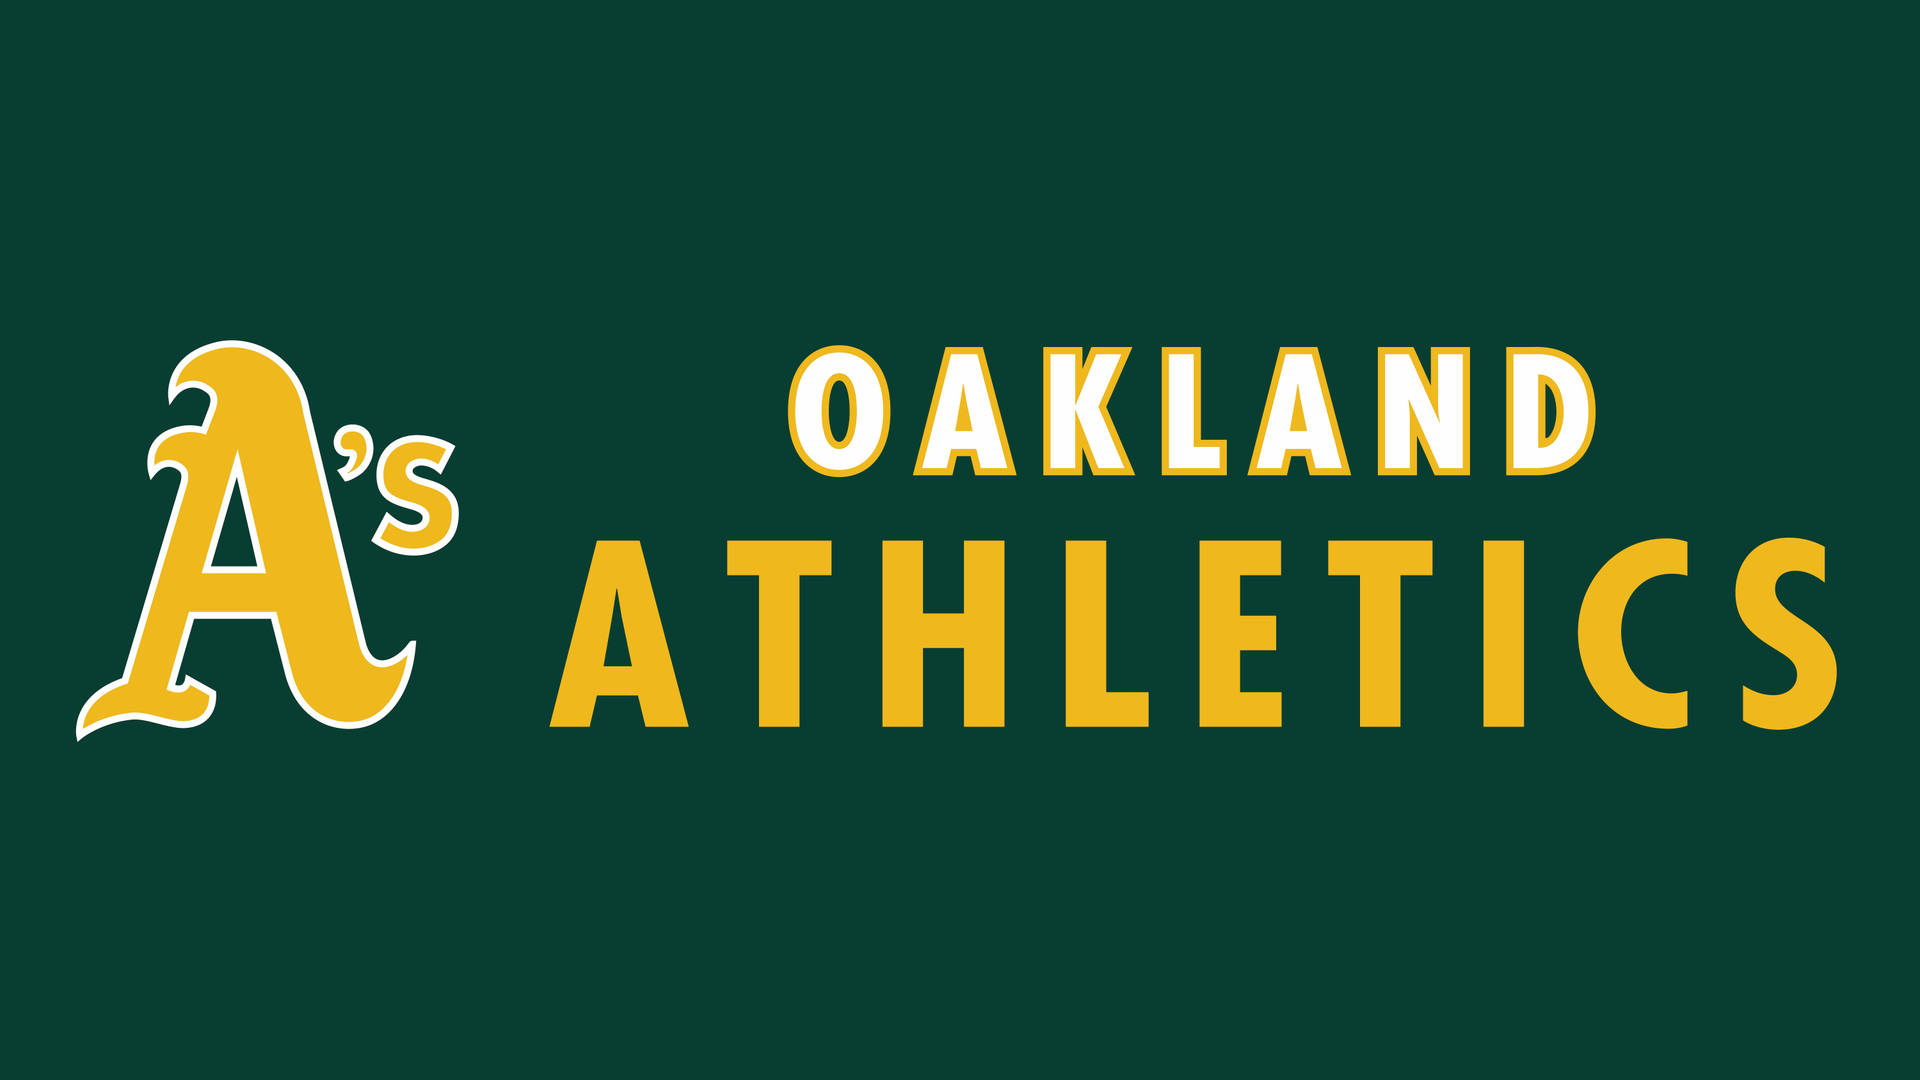 Oakland Athletics Simple Background